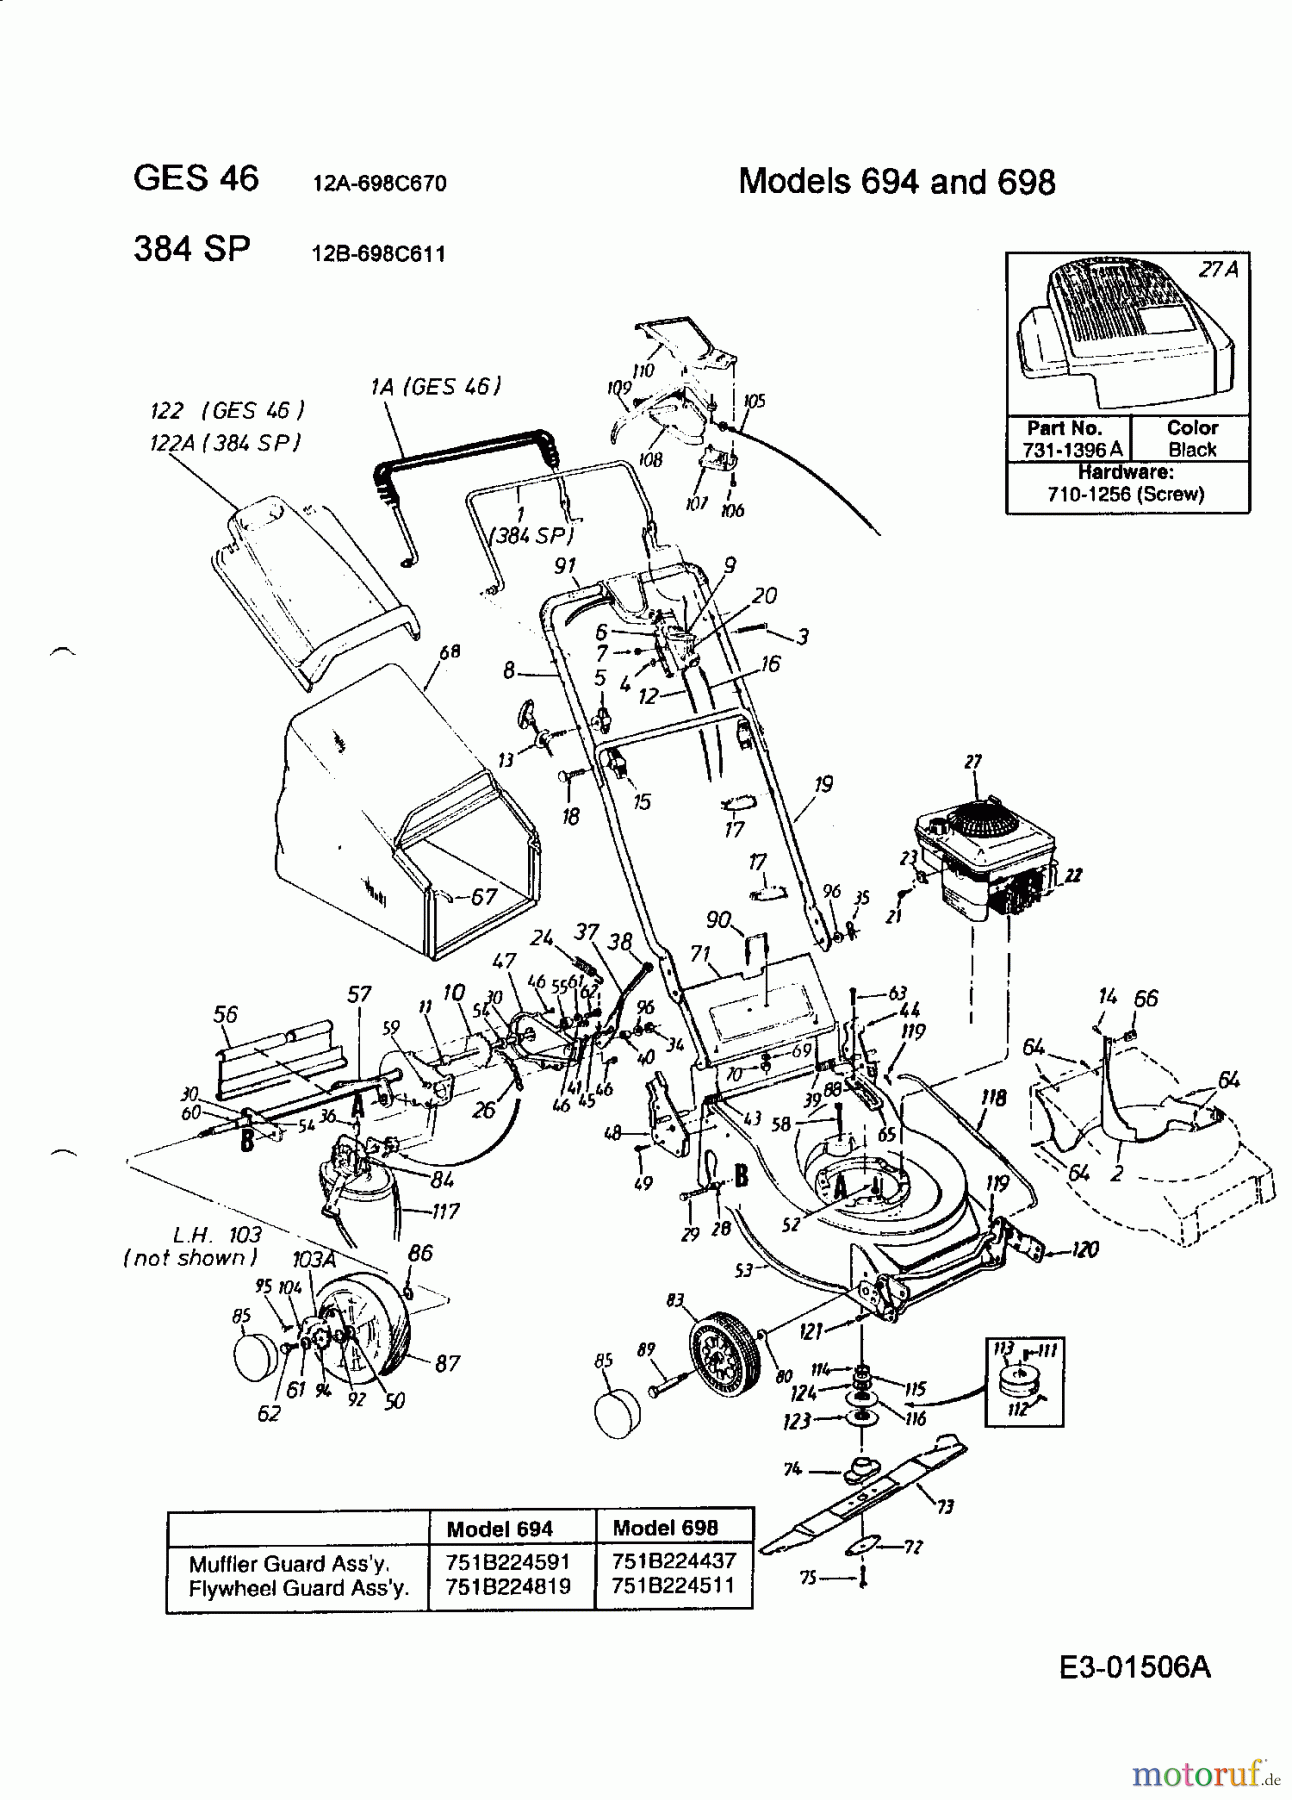  Lawnflite Petrol mower self propelled 384 SP 12B-698C611  (2000) Basic machine